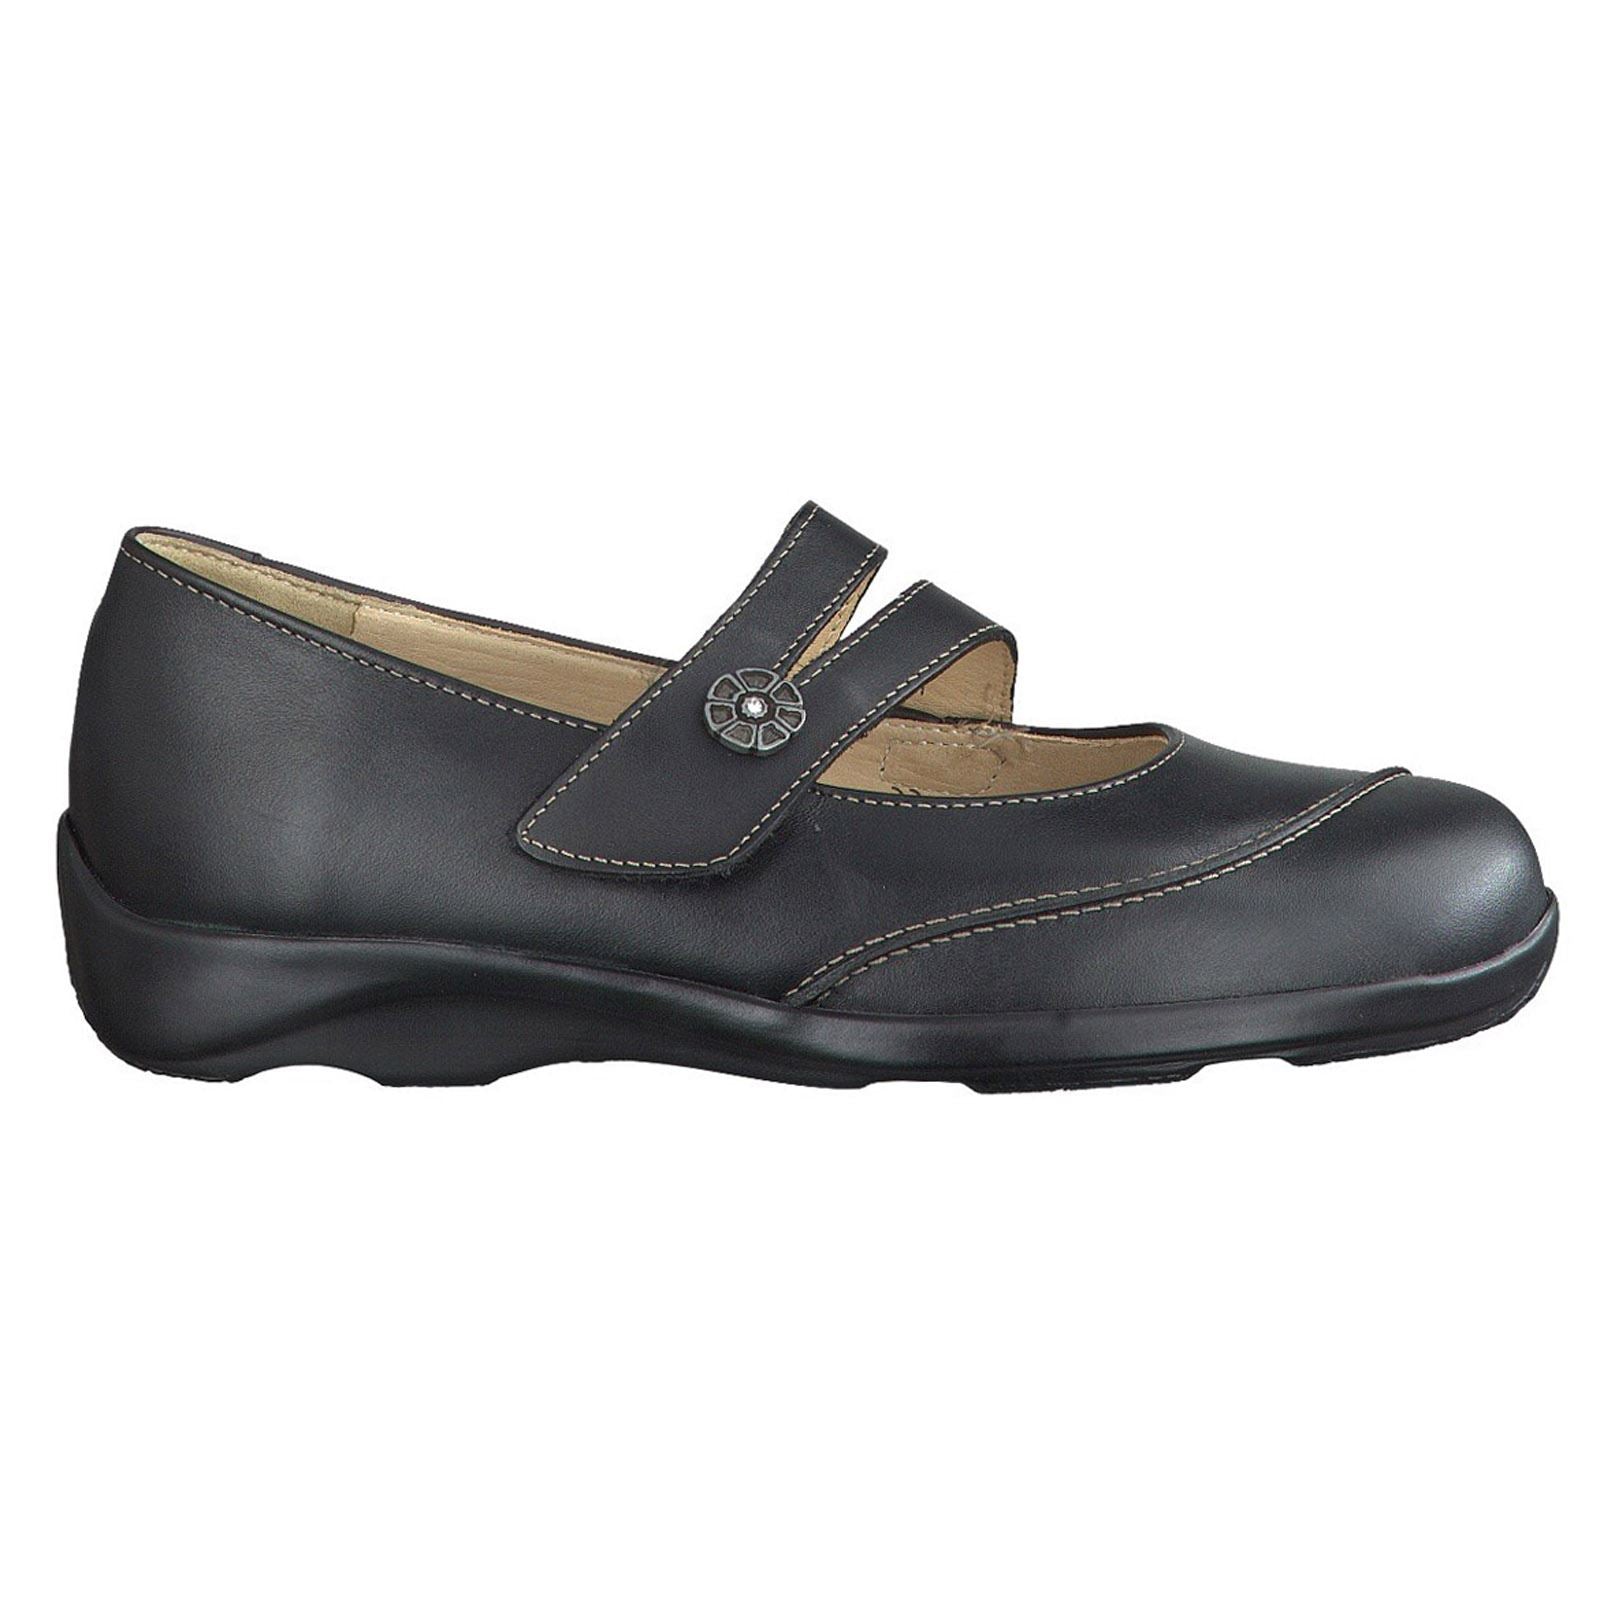 Finn Comfort Vivero 2353 Black Womens Mary Jane Shoes - UK 5